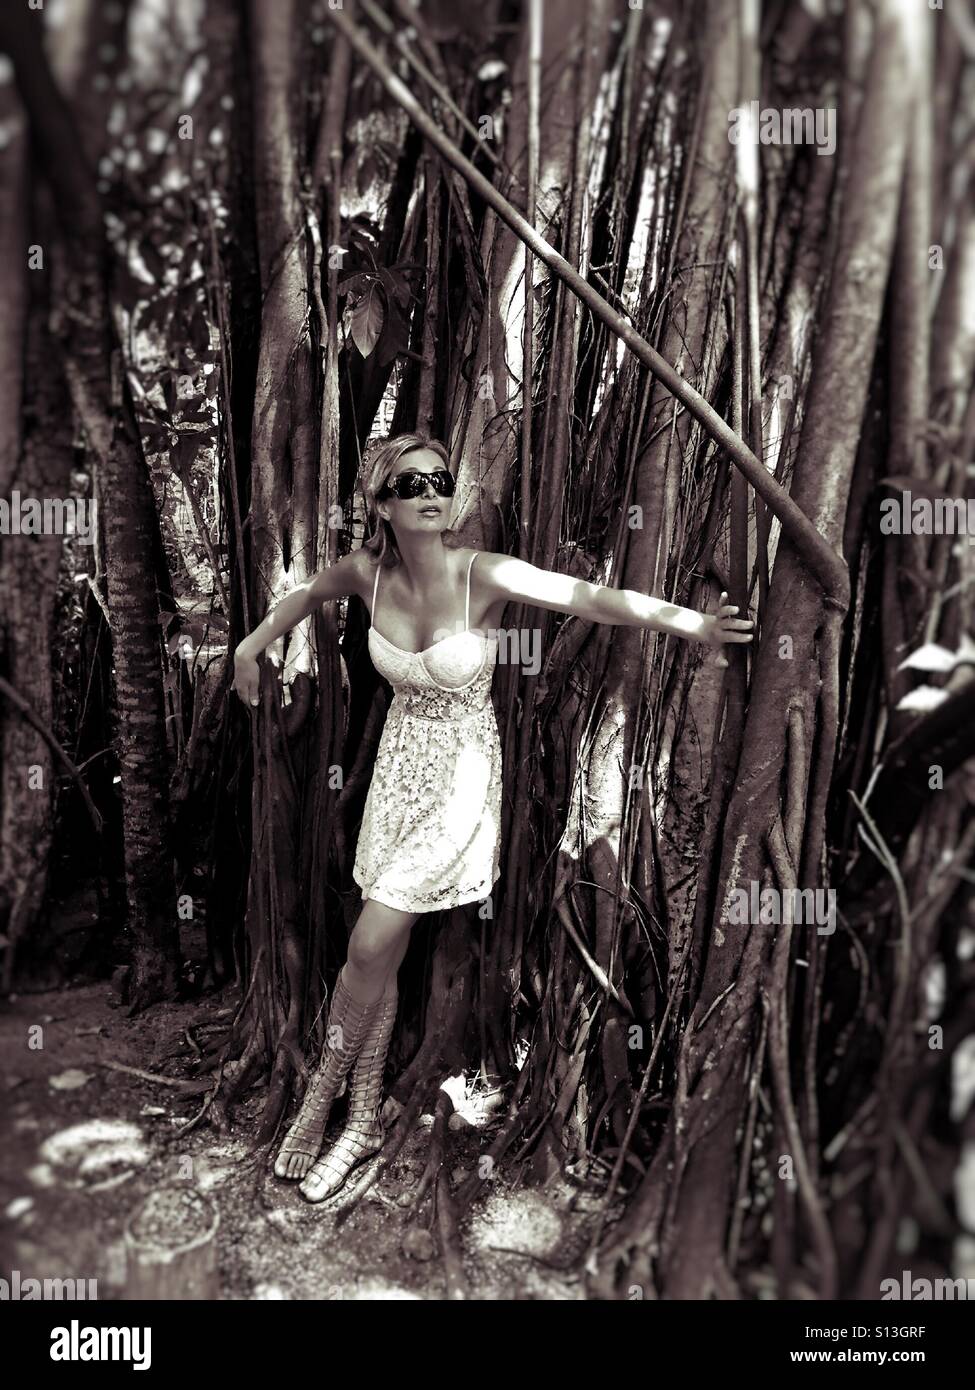 Banyan Tree wood Banque D'Images